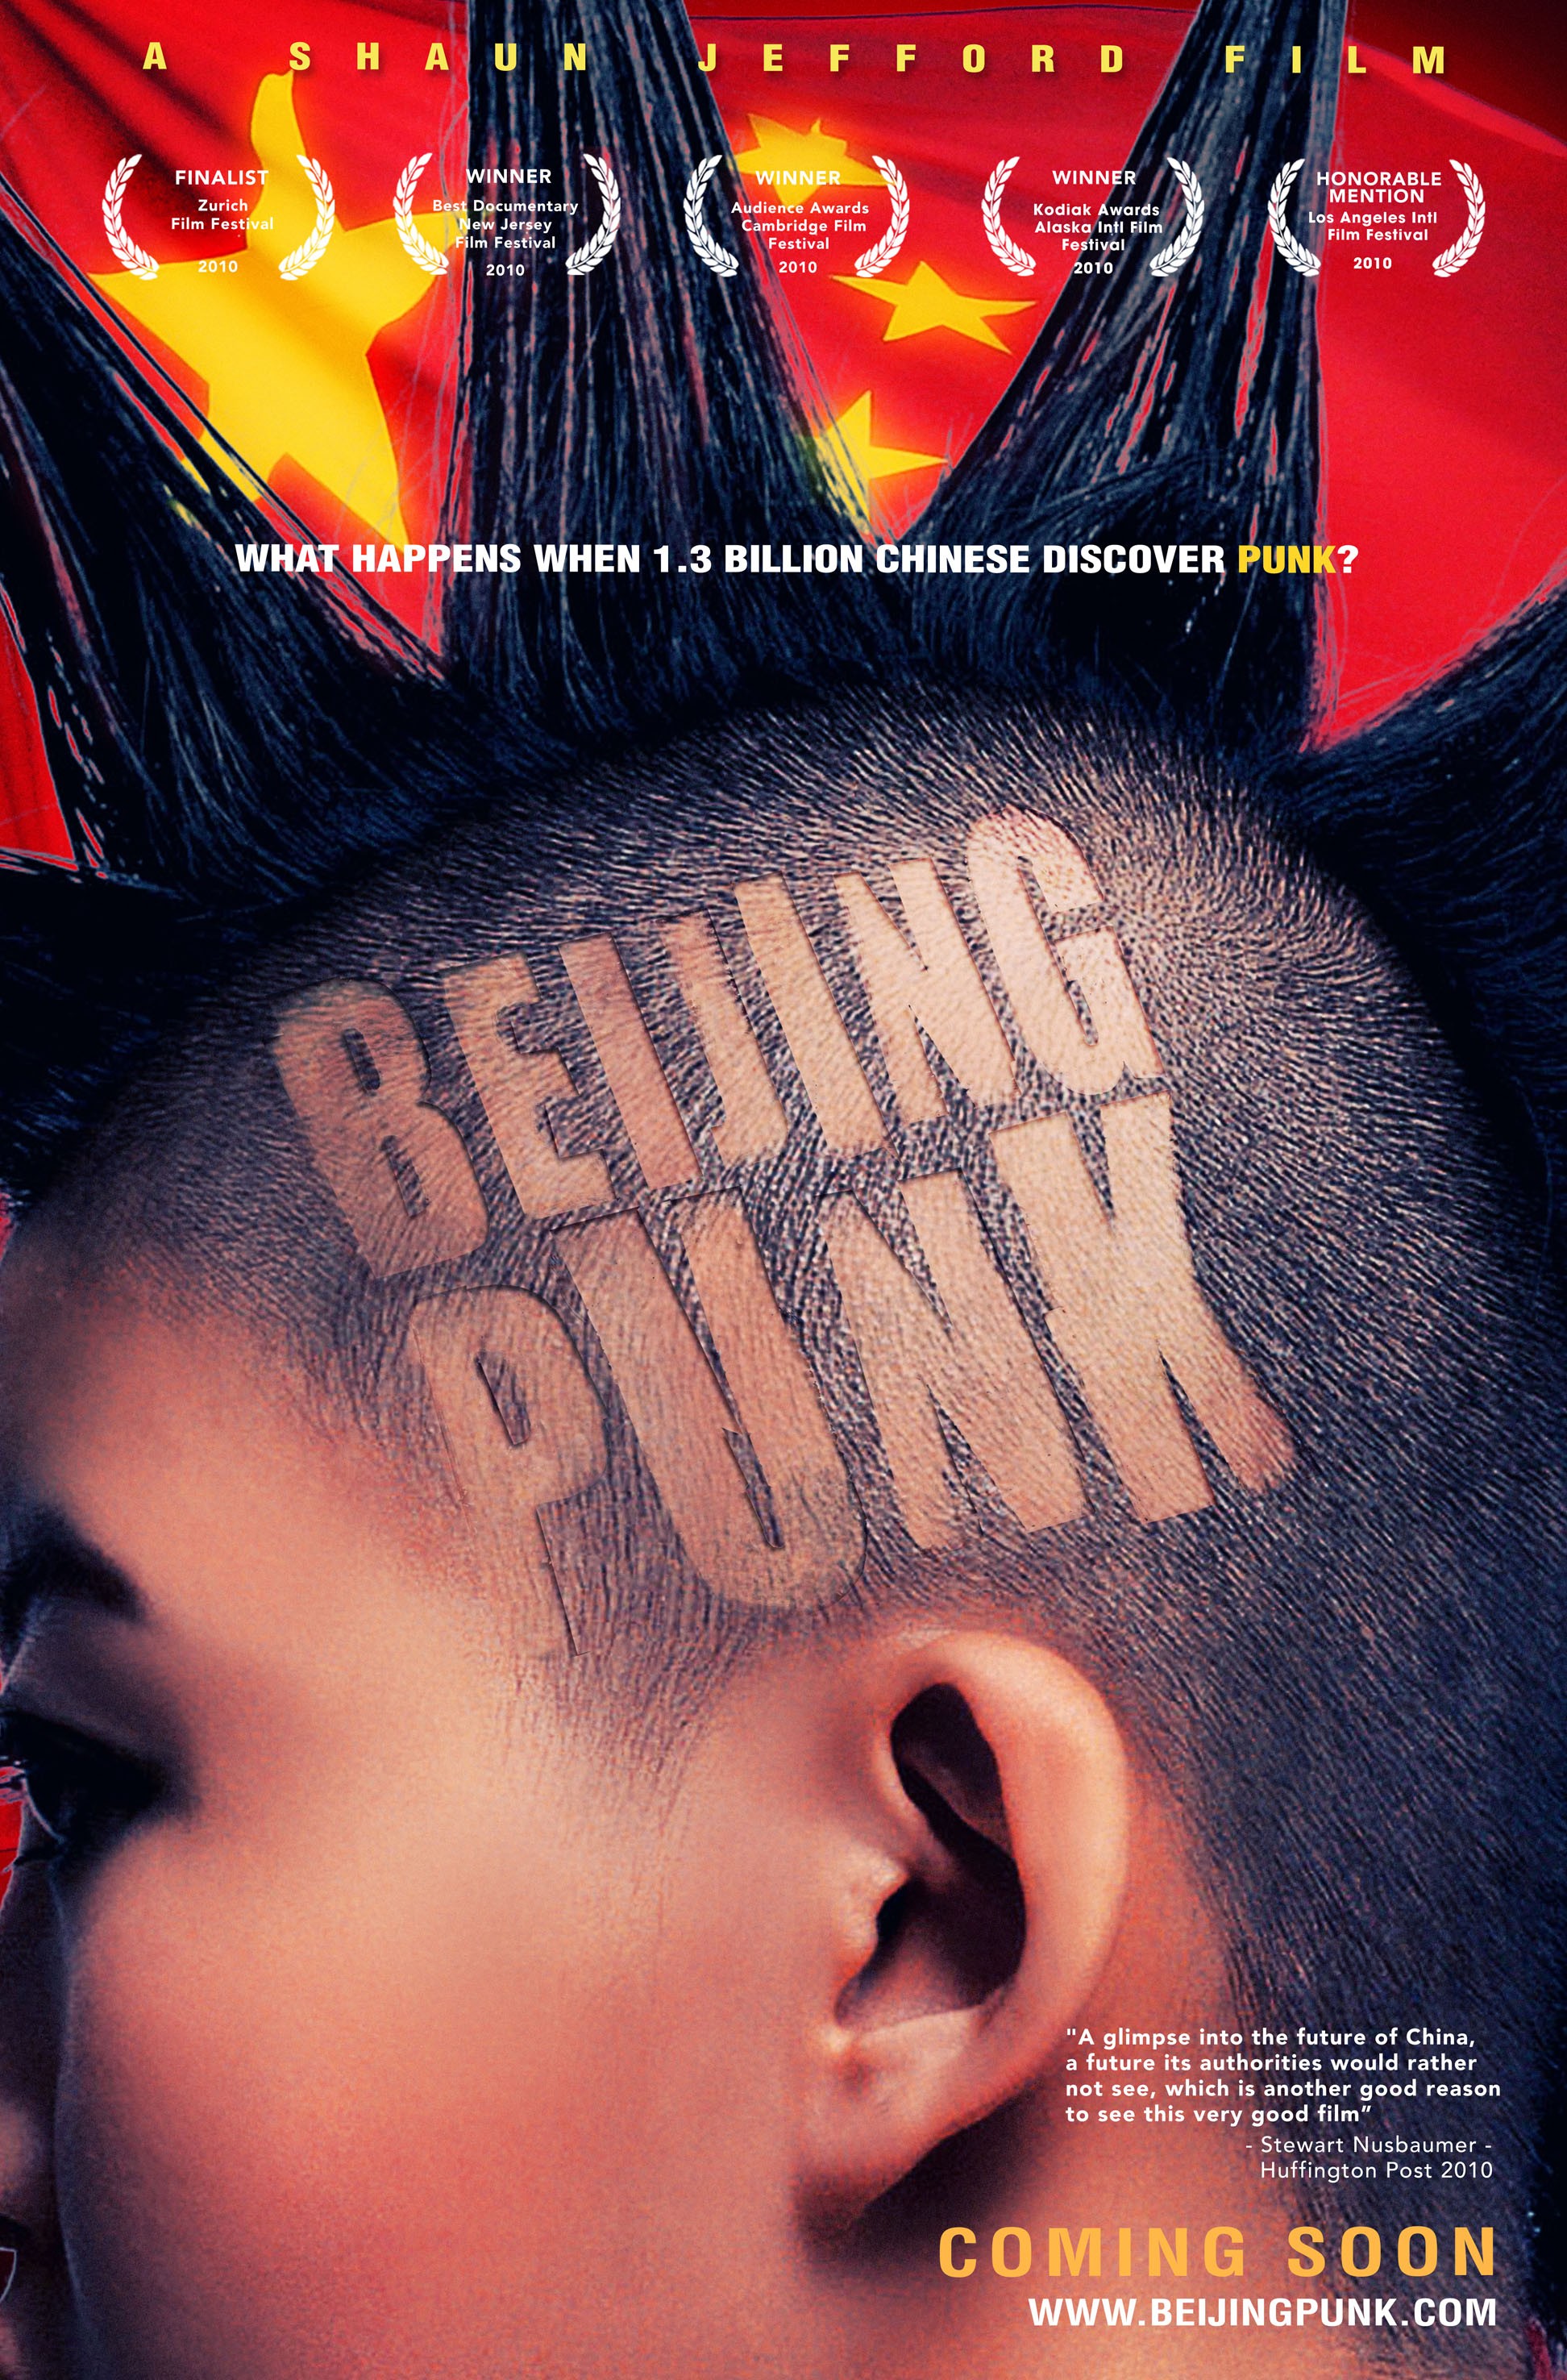 Mega Sized Movie Poster Image for Beijing Punk (#2 of 2)